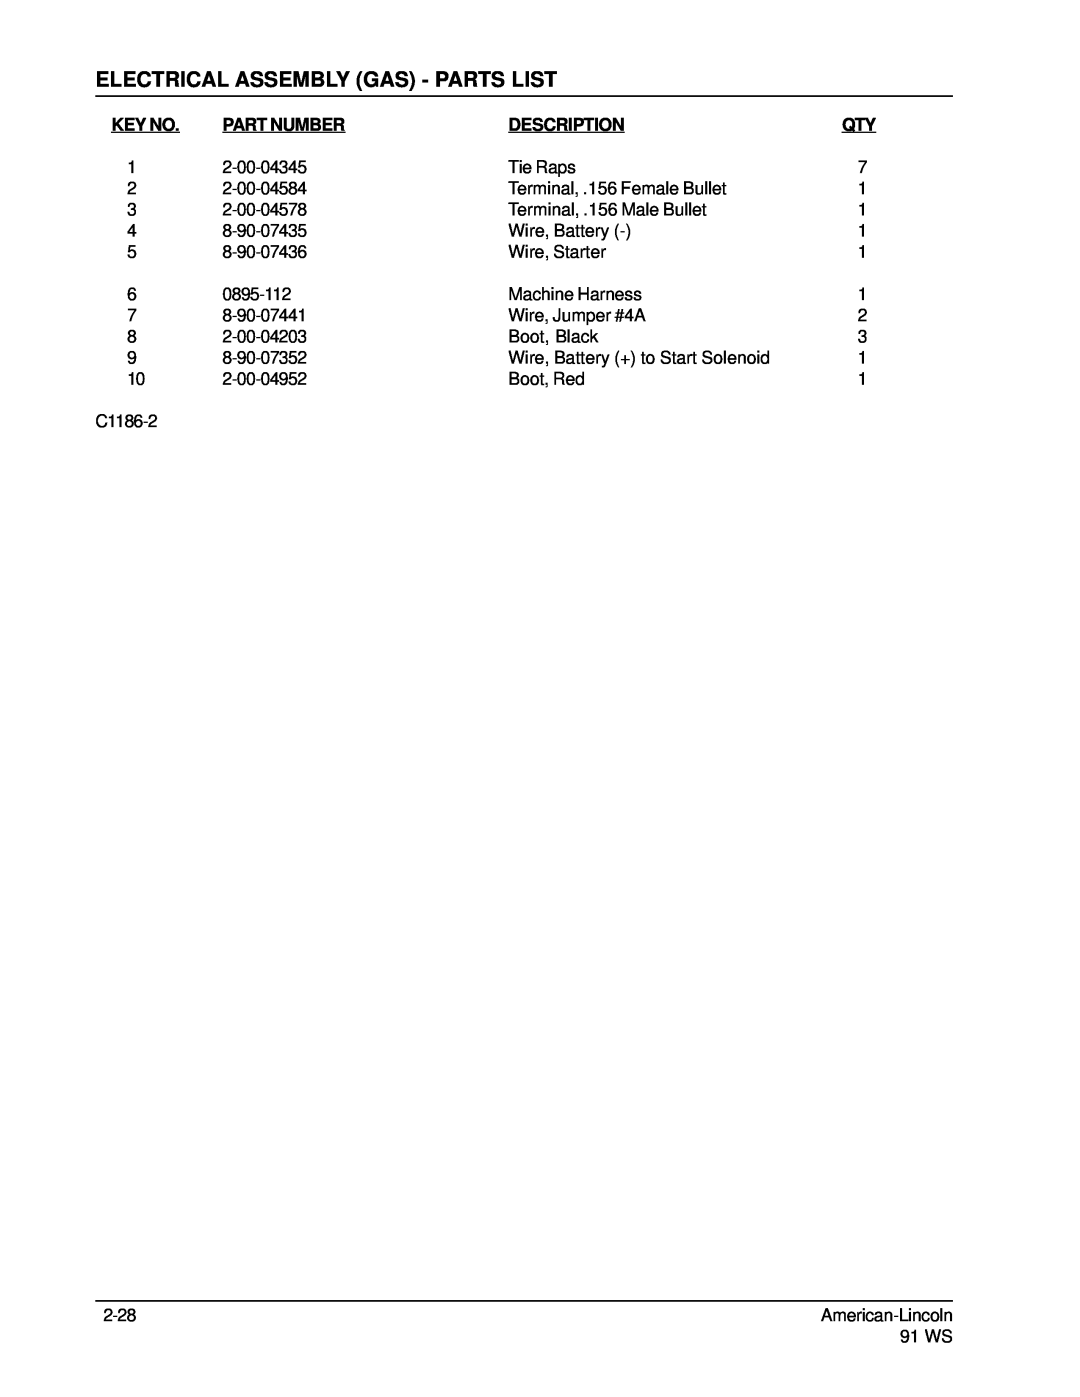 Nilfisk-ALTO 91WS manual Electrical Assembly Gas - Parts List, Part Number, Description 